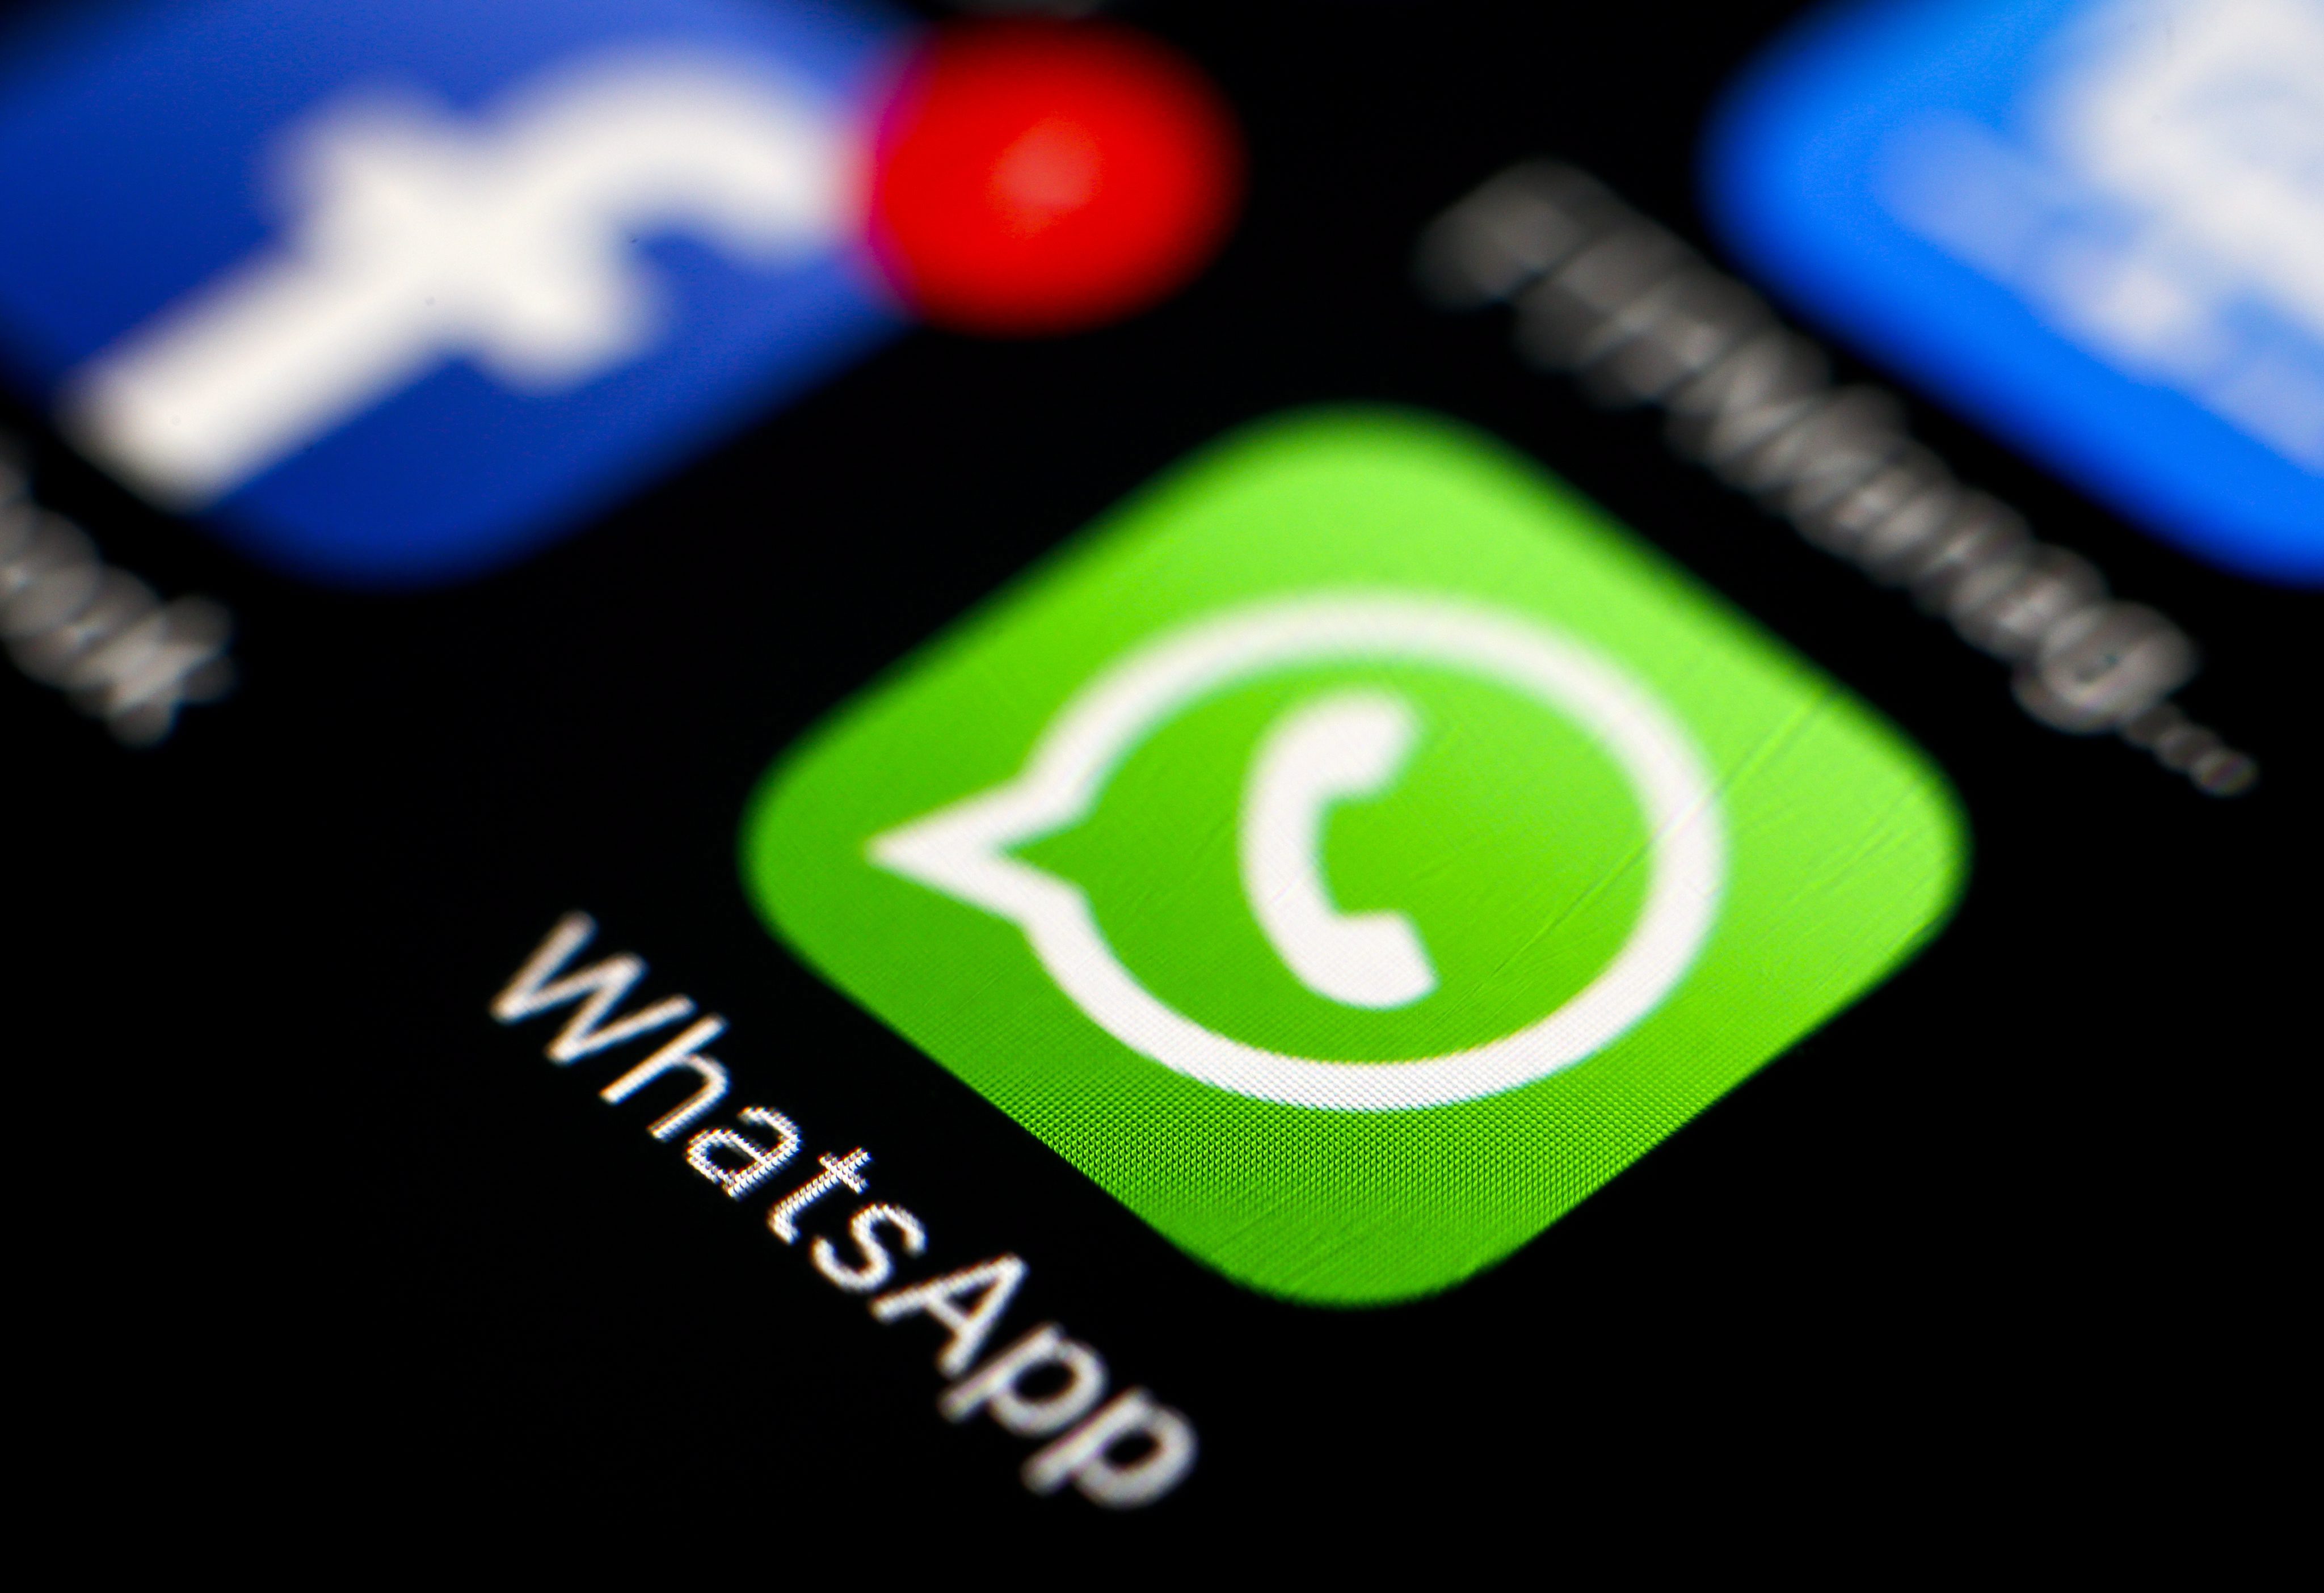 App Store 7 أبريل 2020 ، يضع WhatsApp حدًا لإعادة توجيه الرسائل في المعركة ضد `` الأخبار الكاذبة ''